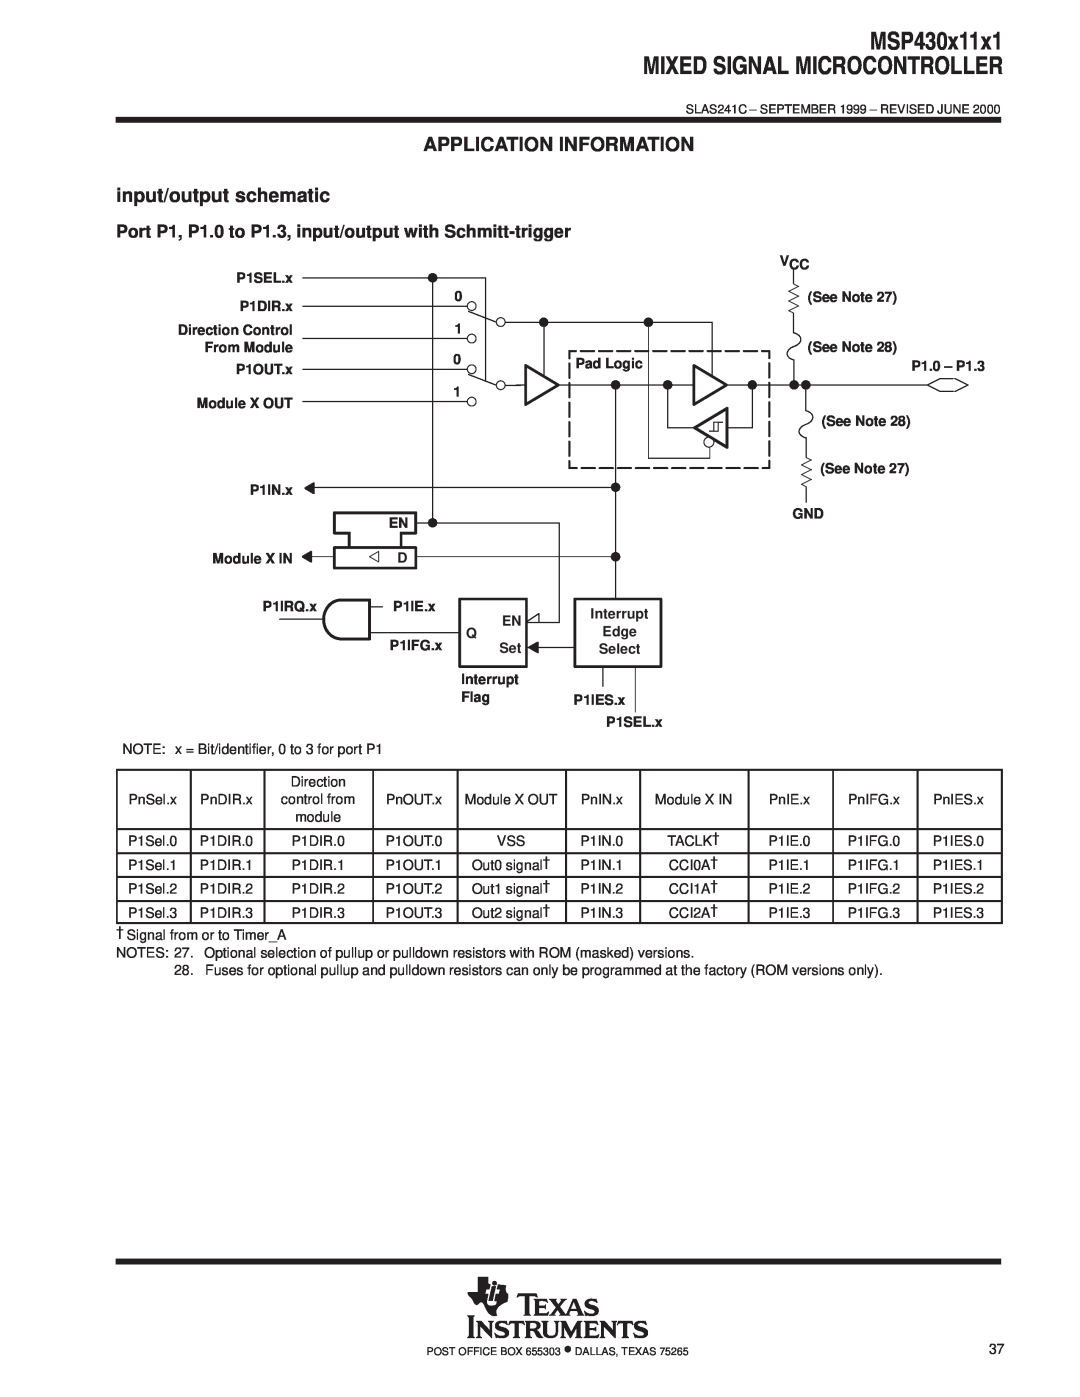 Texas Instruments warranty APPLICATION INFORMATION input/output schematic, MSP430x11x1 MIXED SIGNAL MICROCONTROLLER 